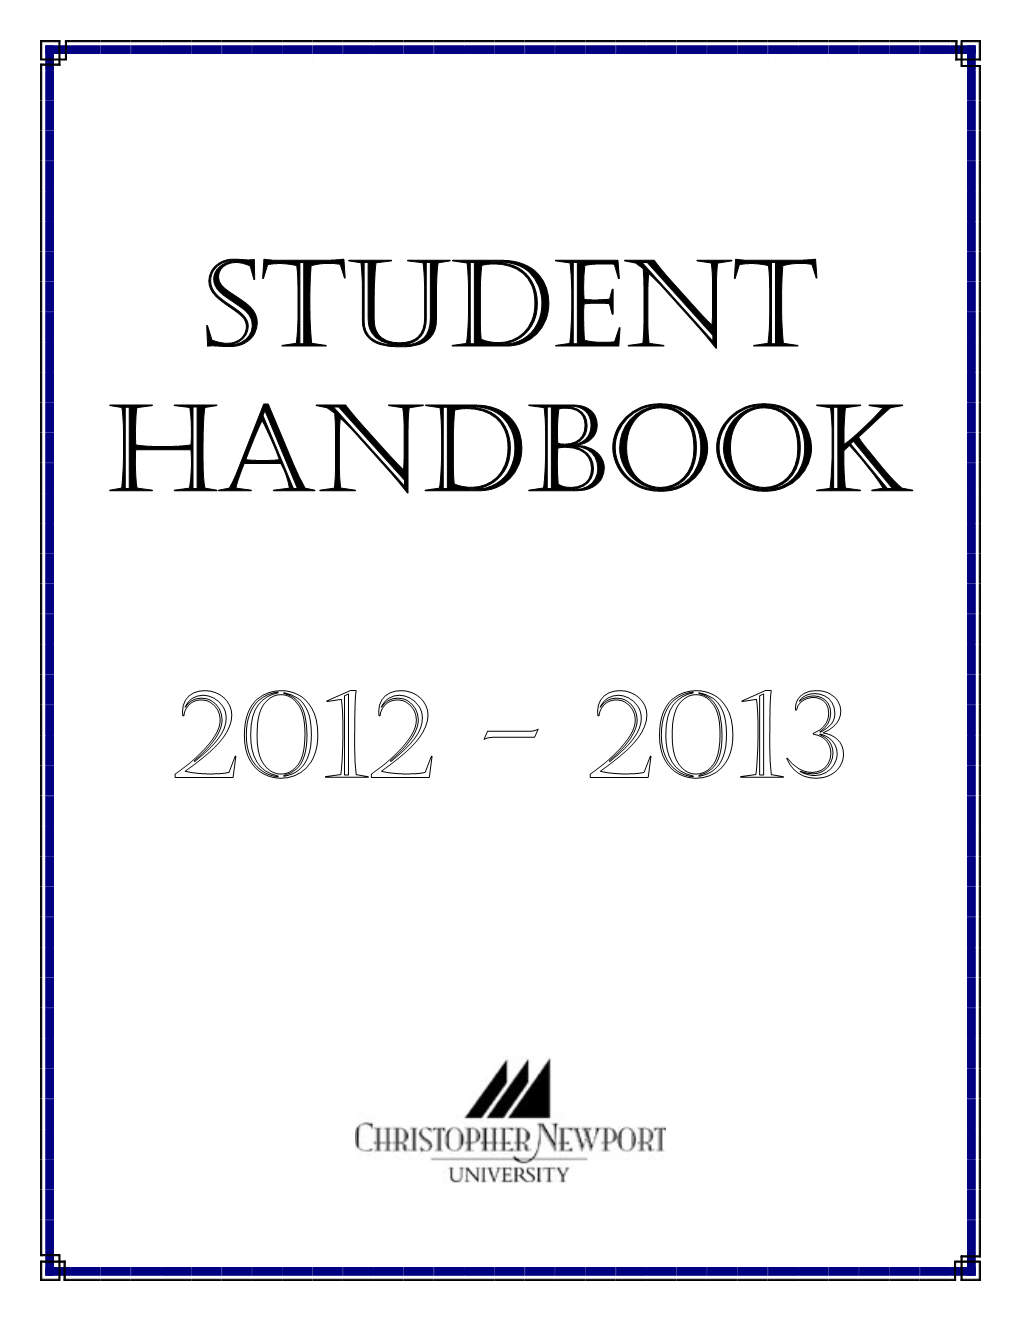 Christopher Newport University 2011-2012 Student Handbook